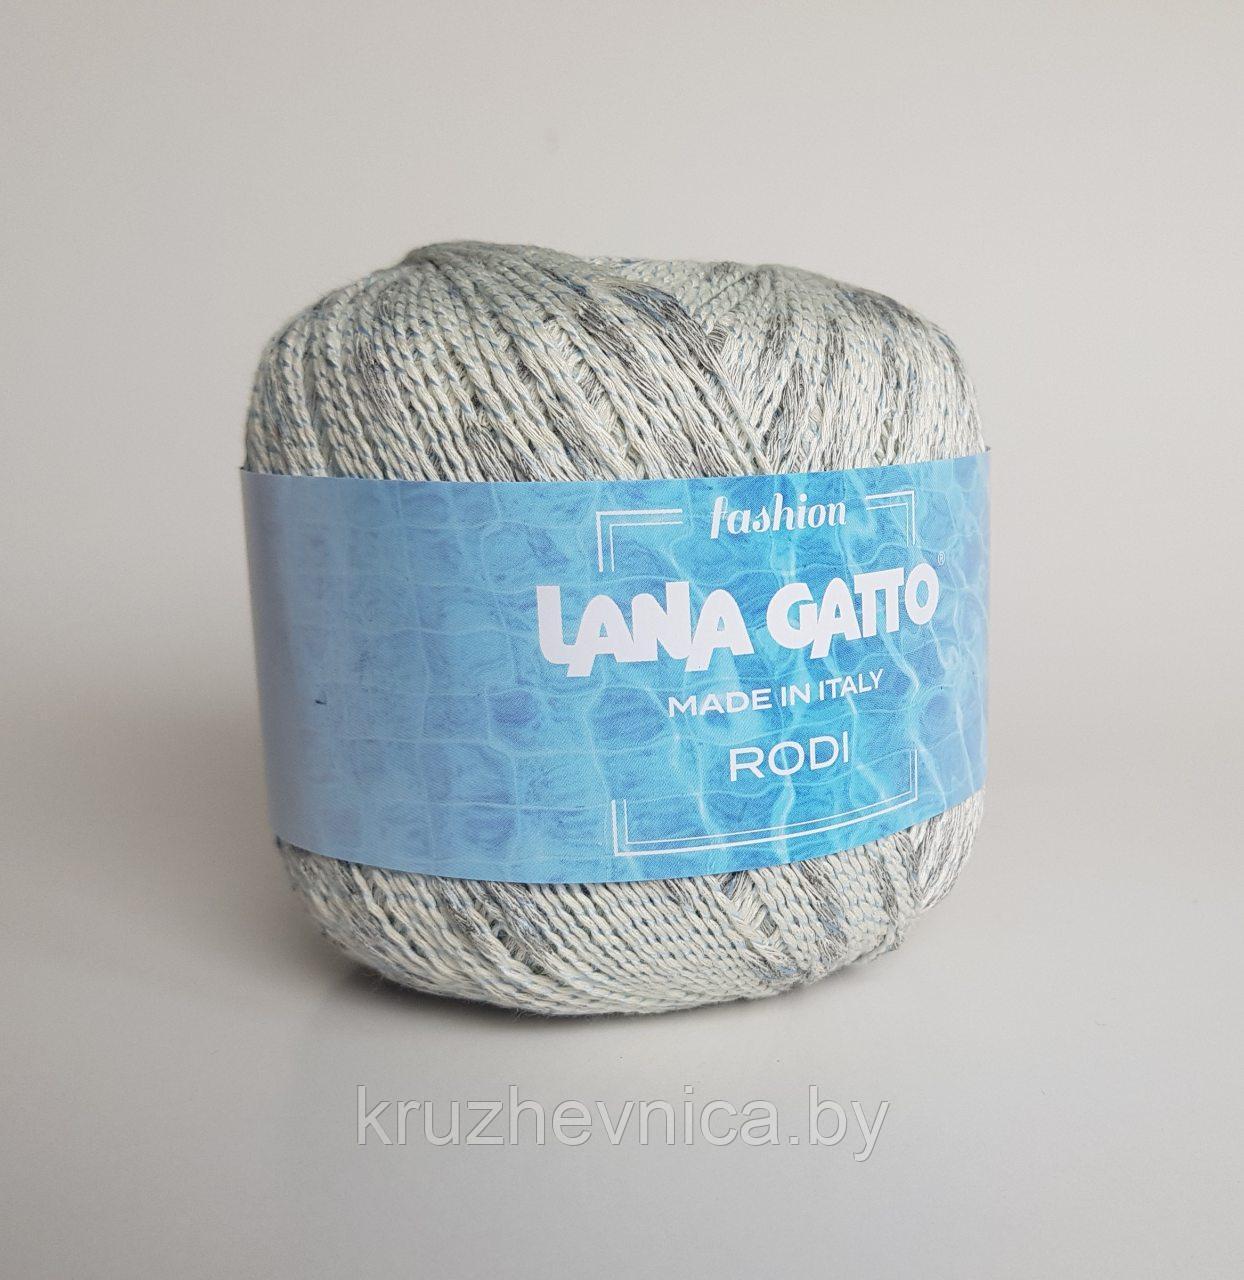 Пряжа Lana Gatto Rodi (68% хлопок, 24% вискоза, 8% нейлон), 50г/155м, цвет 8620 grigio chiaro, фото 1